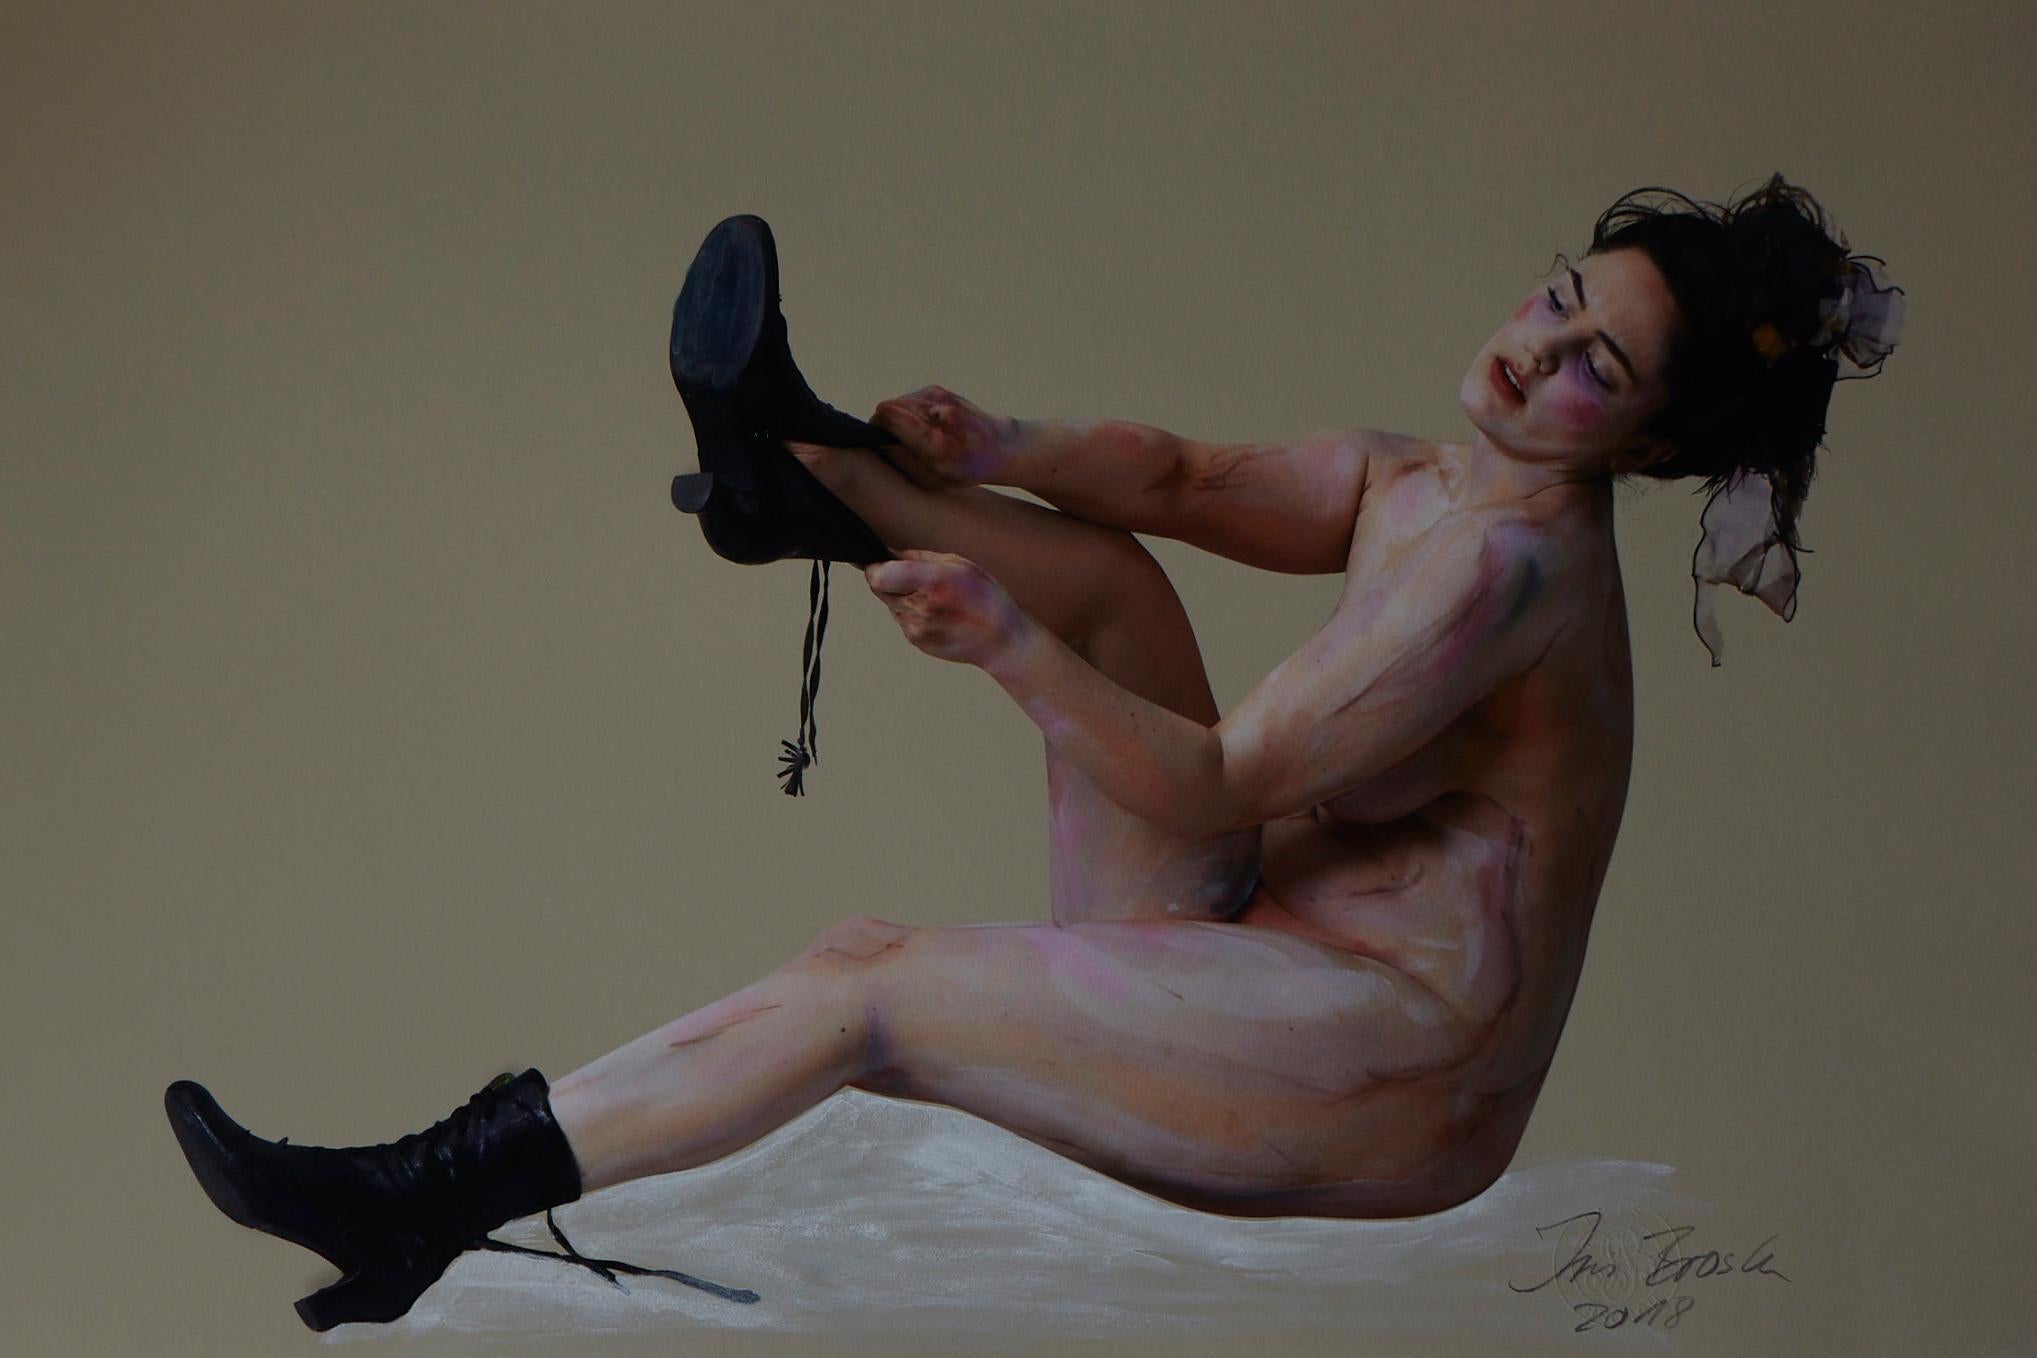 Iris Brosch Nude Photograph - FRAU SCHUHE ANZIEHEND; Homage to Egon Schiele